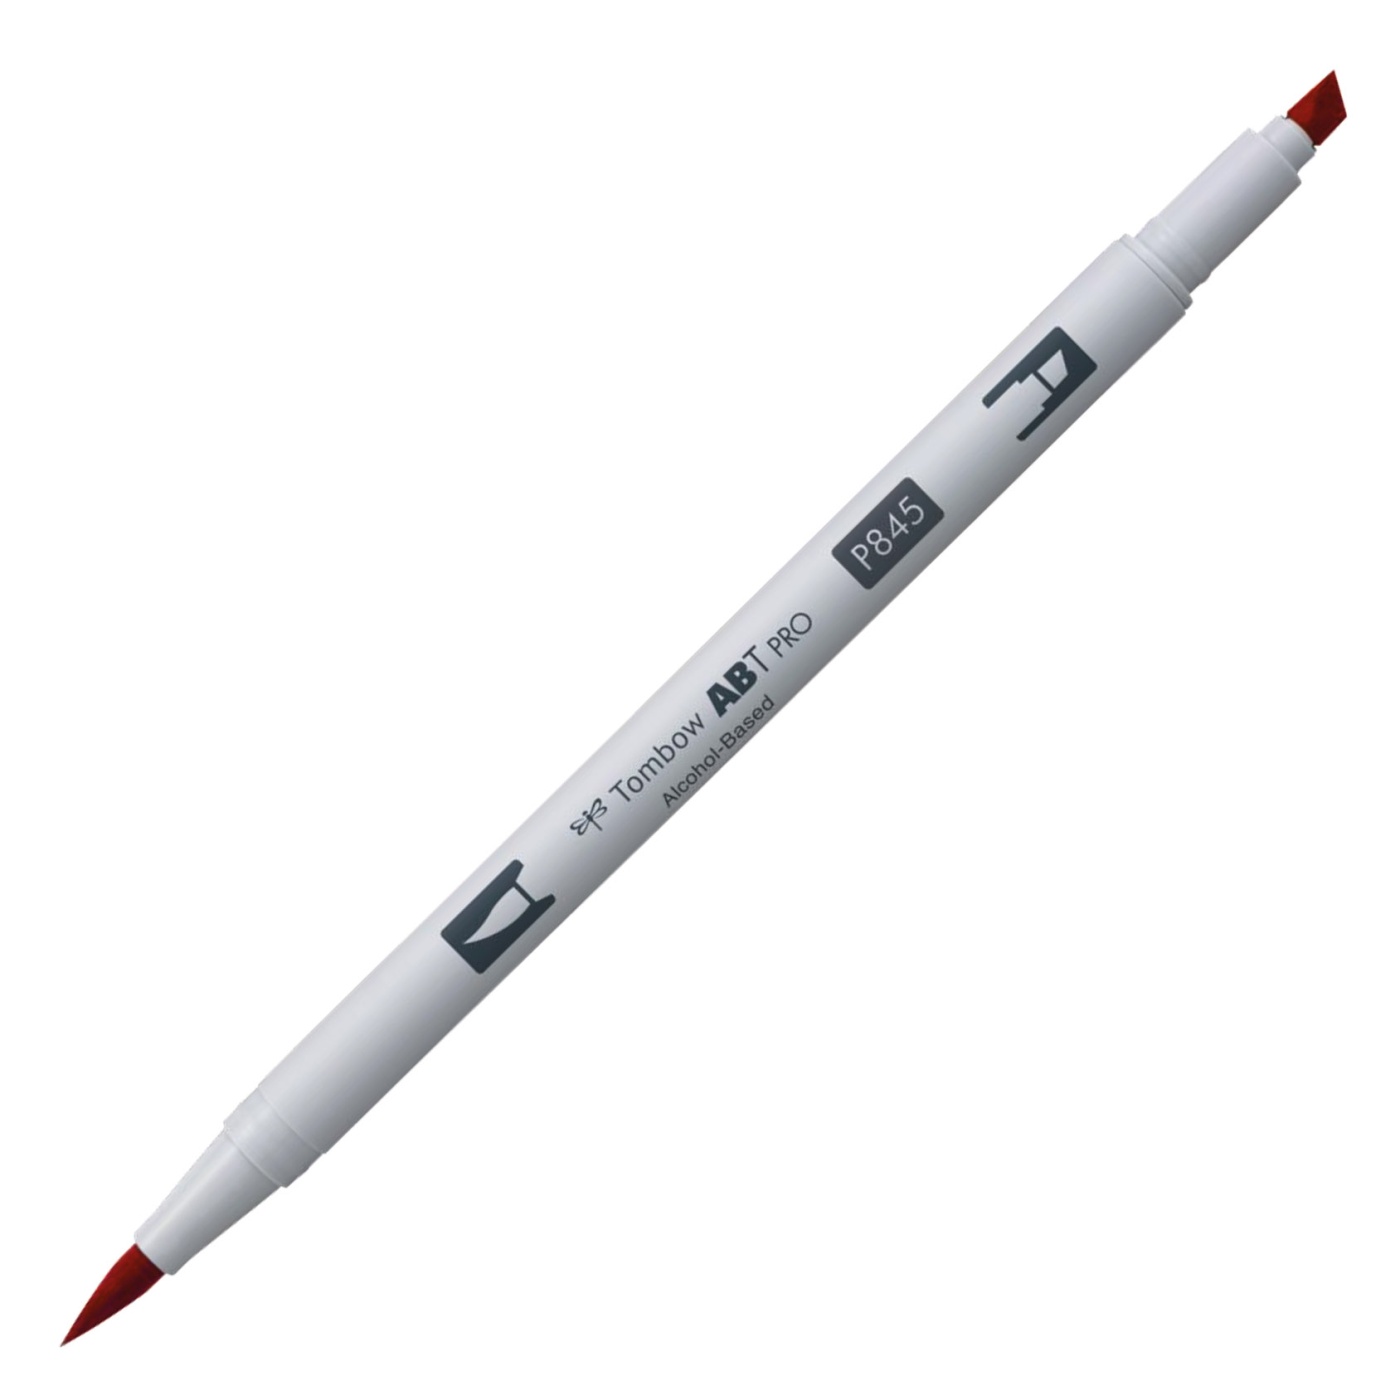 ABT PRO Dual Brush Pen 12-set Manga i gruppen Pennor / Konstnärspennor / Illustrationsmarkers hos Pen Store (101256)